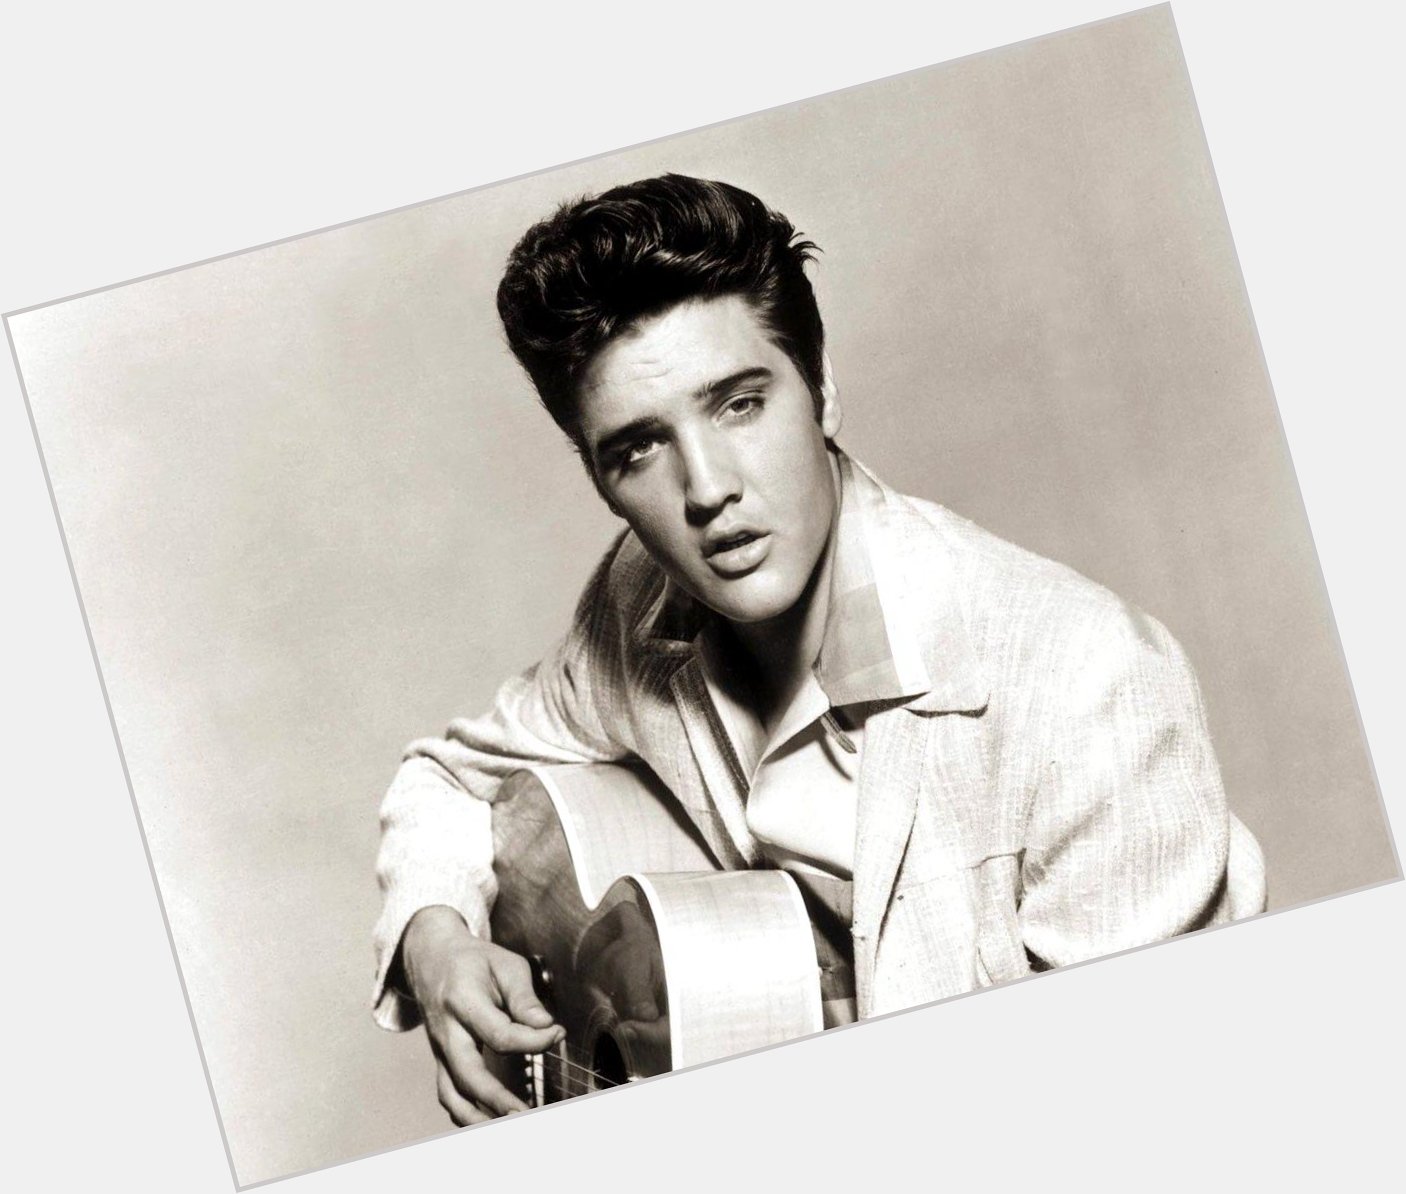 All hail the King! Happy 80th birthday Elvis!  